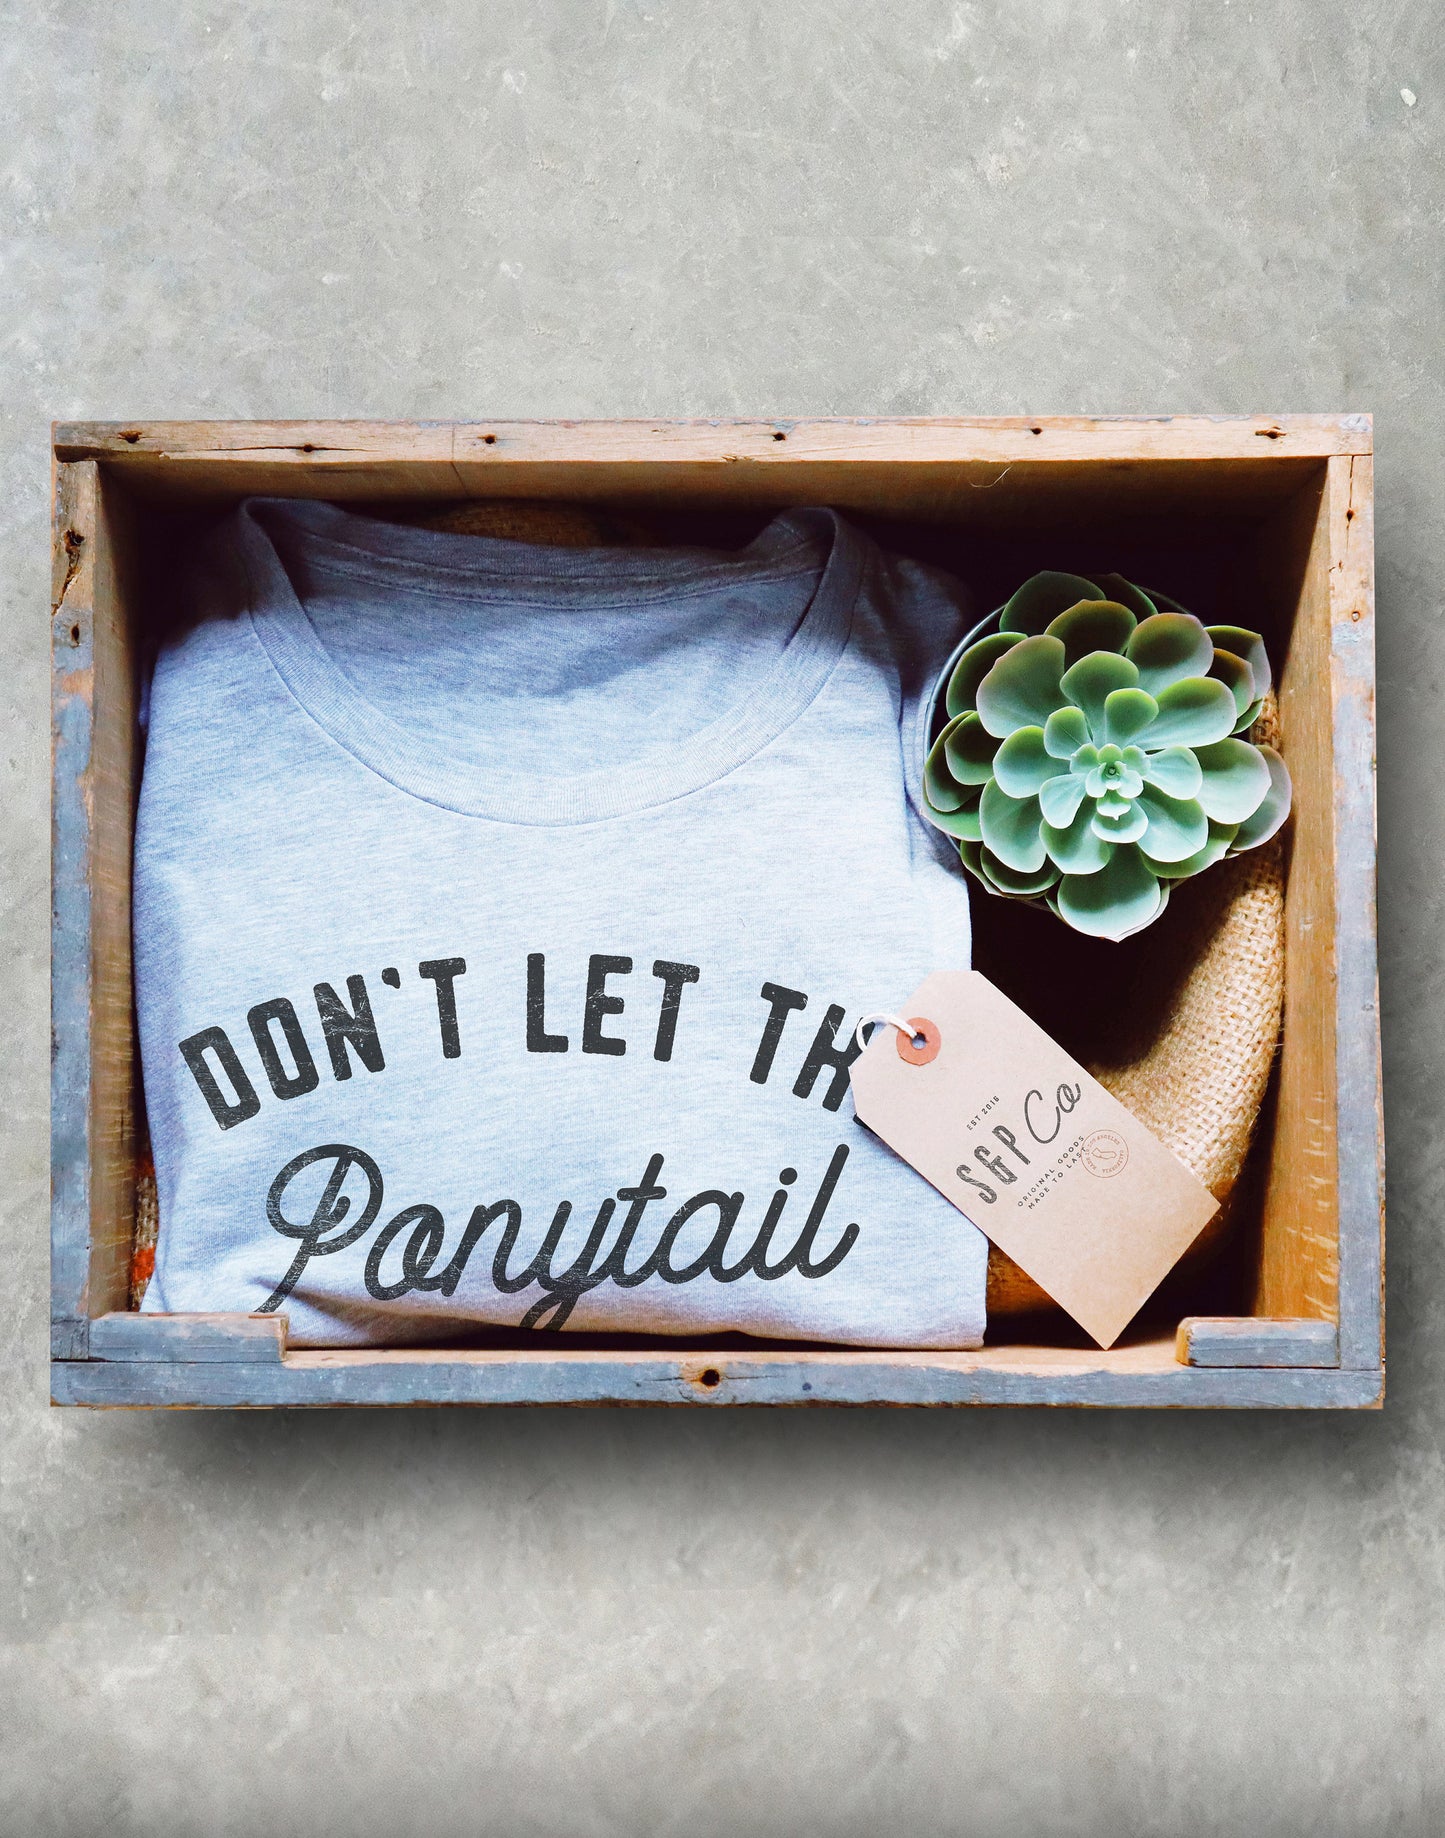 Don't Let The Ponytail Fool You Unisex Shirt - Karate Shirt, Karate Gift, Martial Arts, Judo, Jiu Jitsu, Kung Fu, Gift For Coach, Feminist